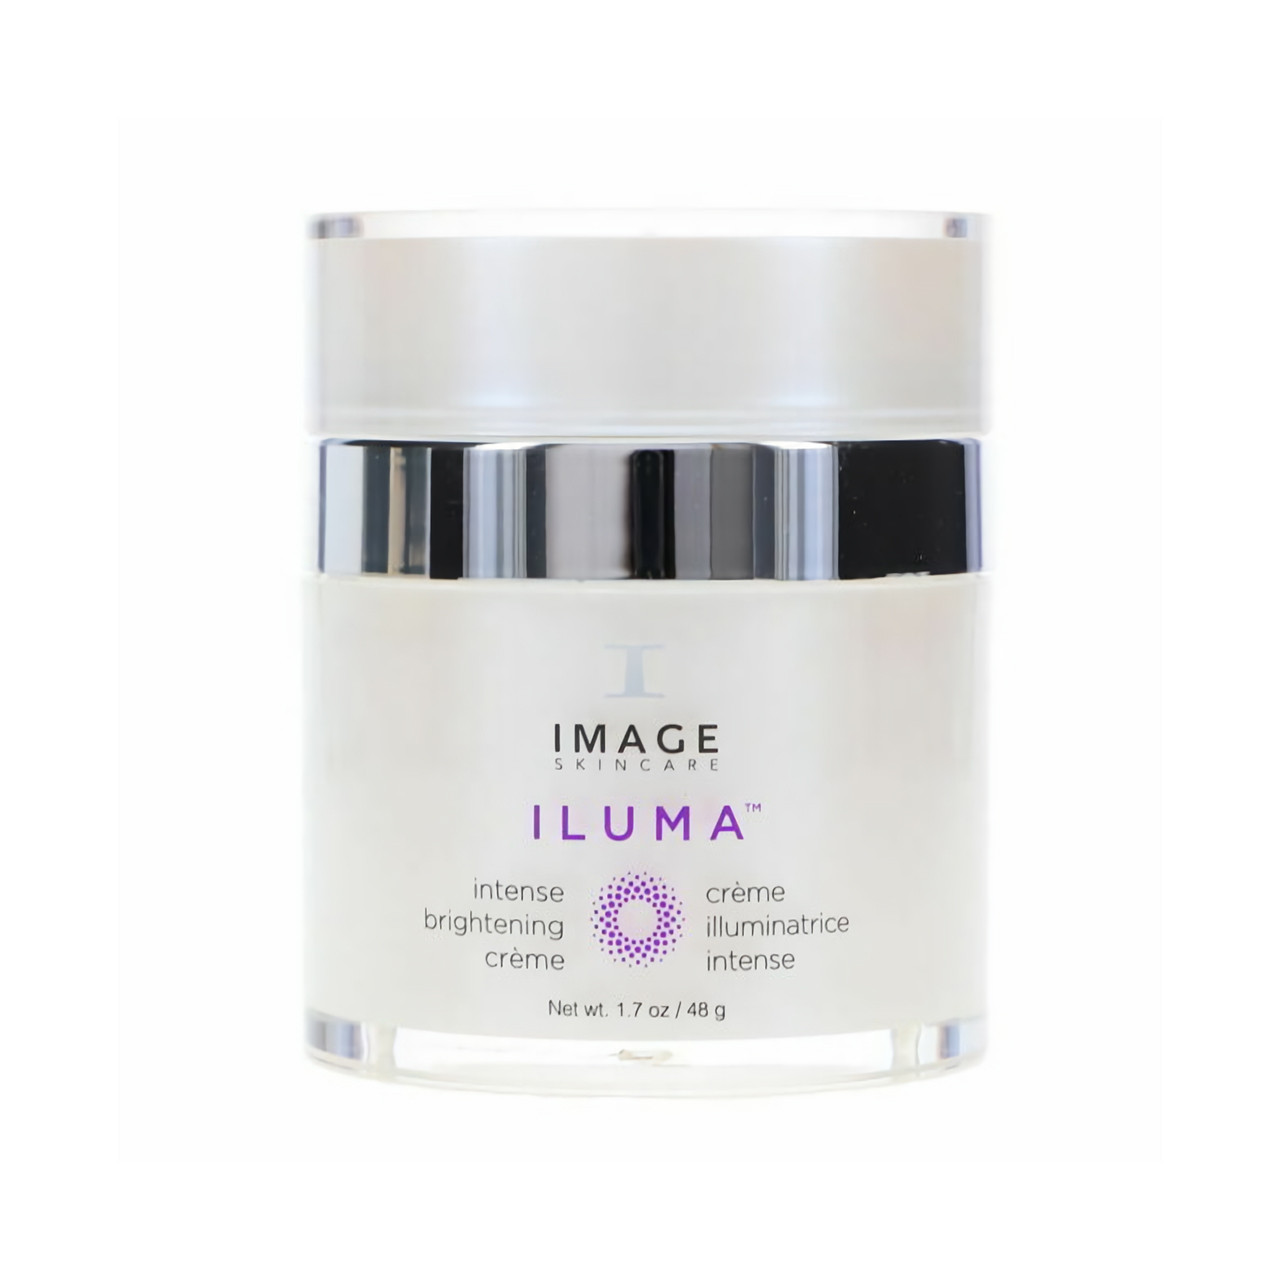 Image Skincare Iluma Intense Brightening Creme - 1.7 oz (IL-204)